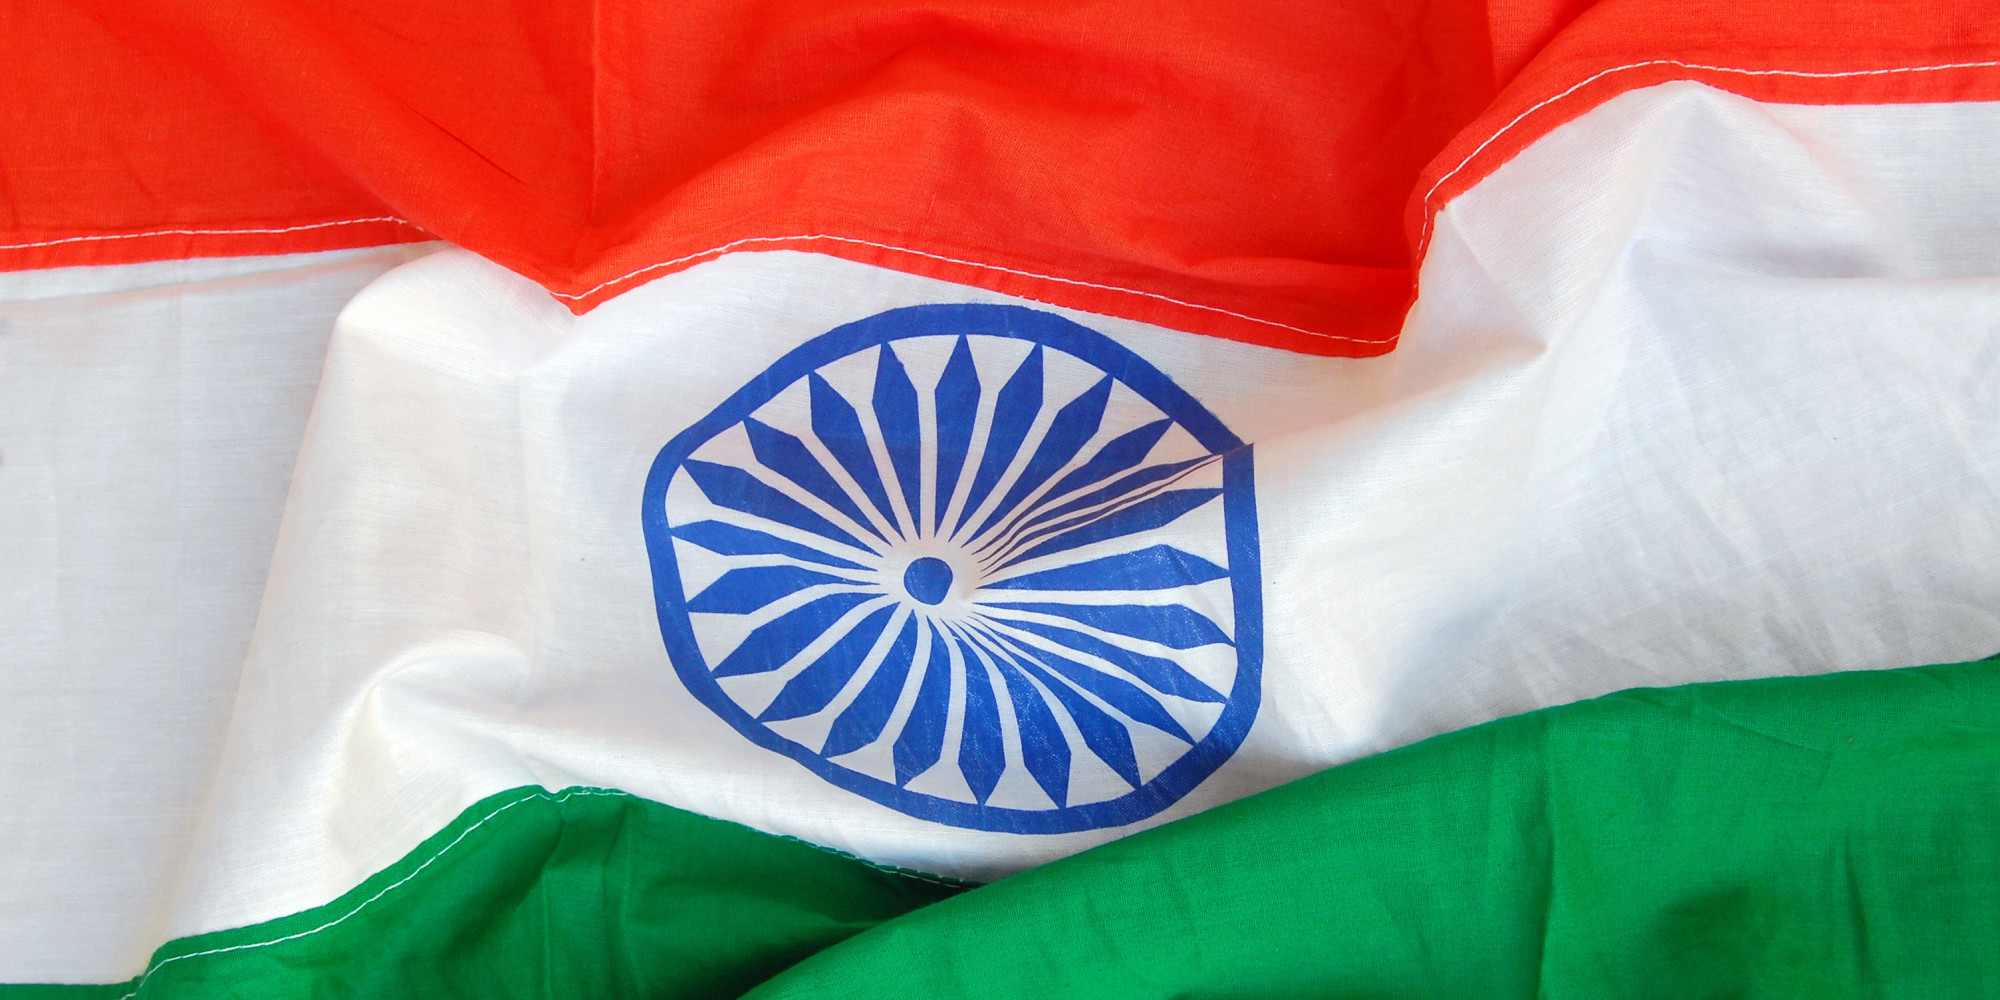 Indian national flag essay in gujarati